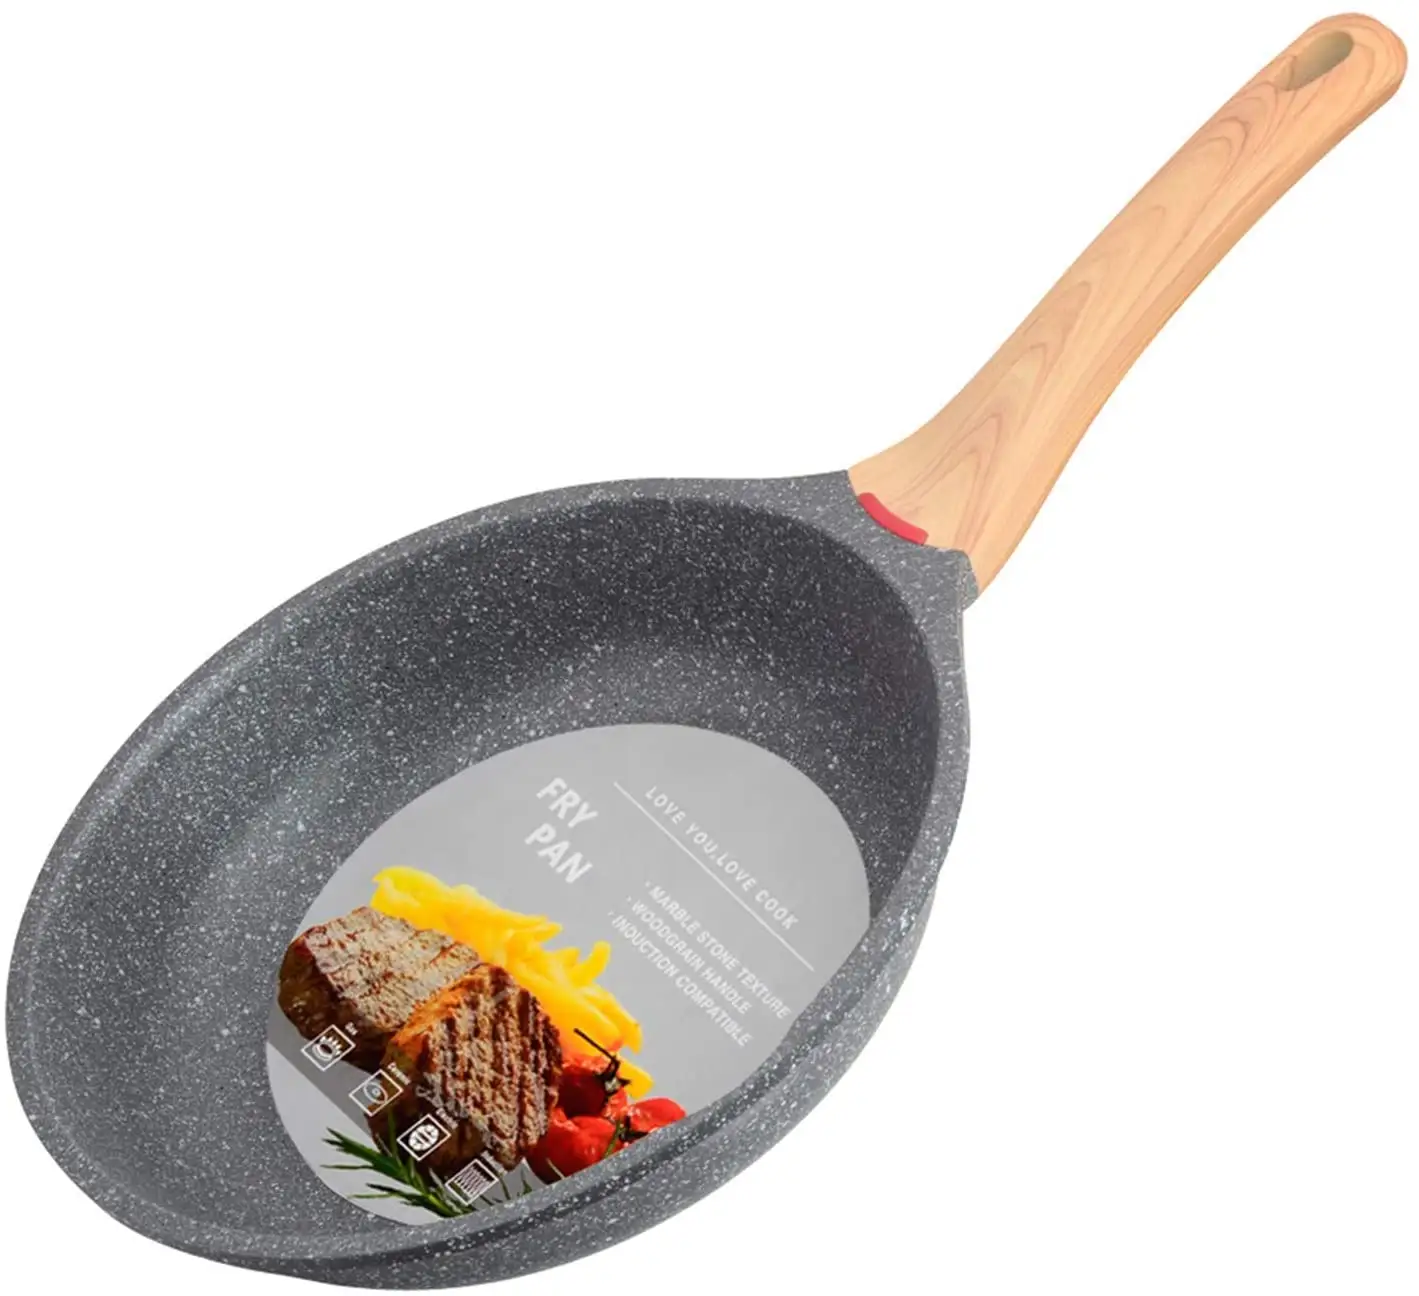 Amazon hot sale cookware aluminum cooking tools kitchen utensils 8" 10" 9.5" 11" nonstick Induction Granite Stone Frying Pan